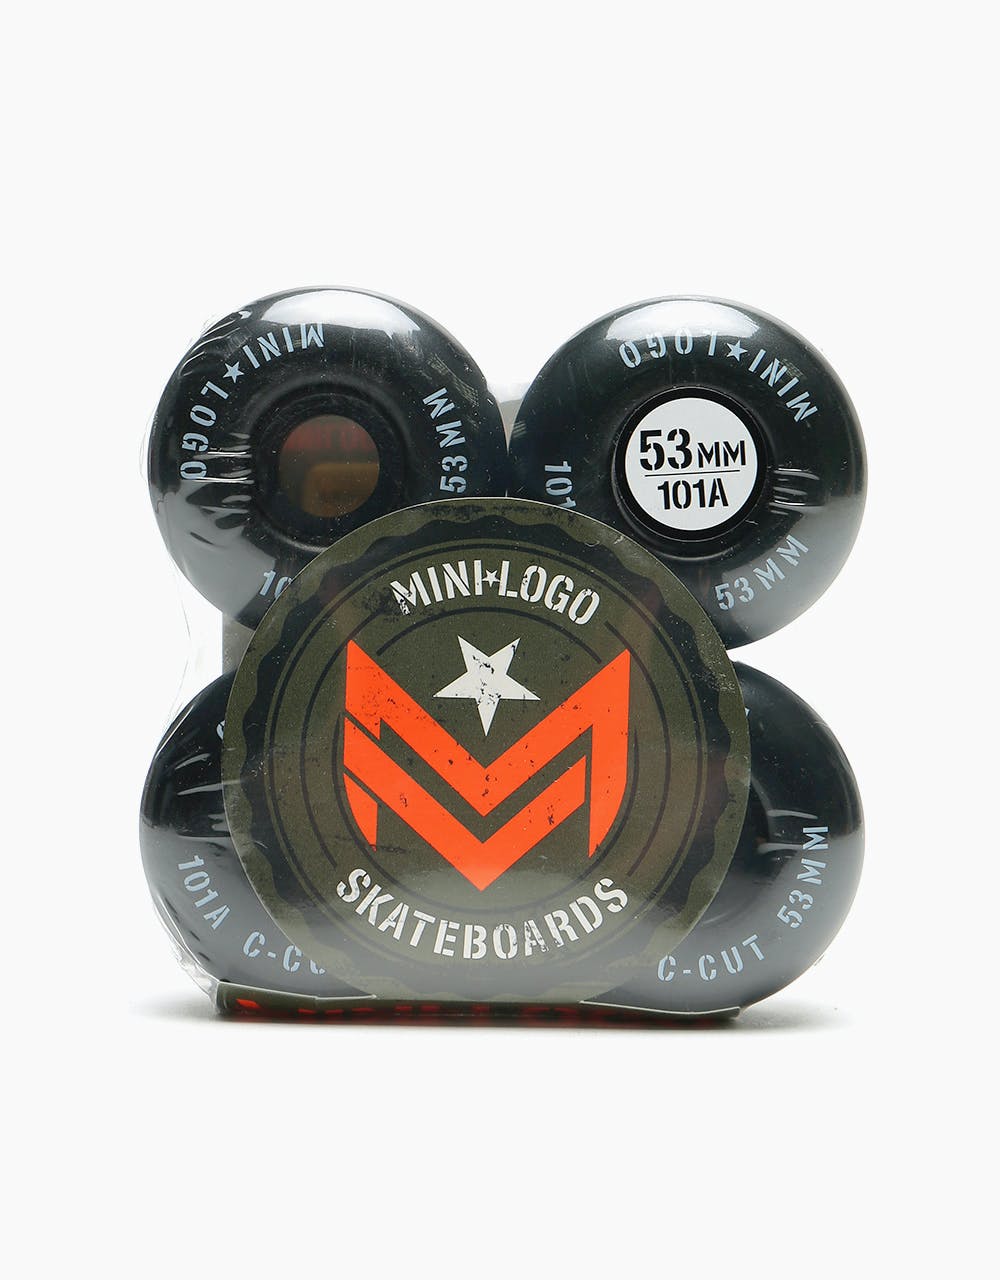 Mini Logo C-Cut 2 101a Skateboard Wheel - 53mm